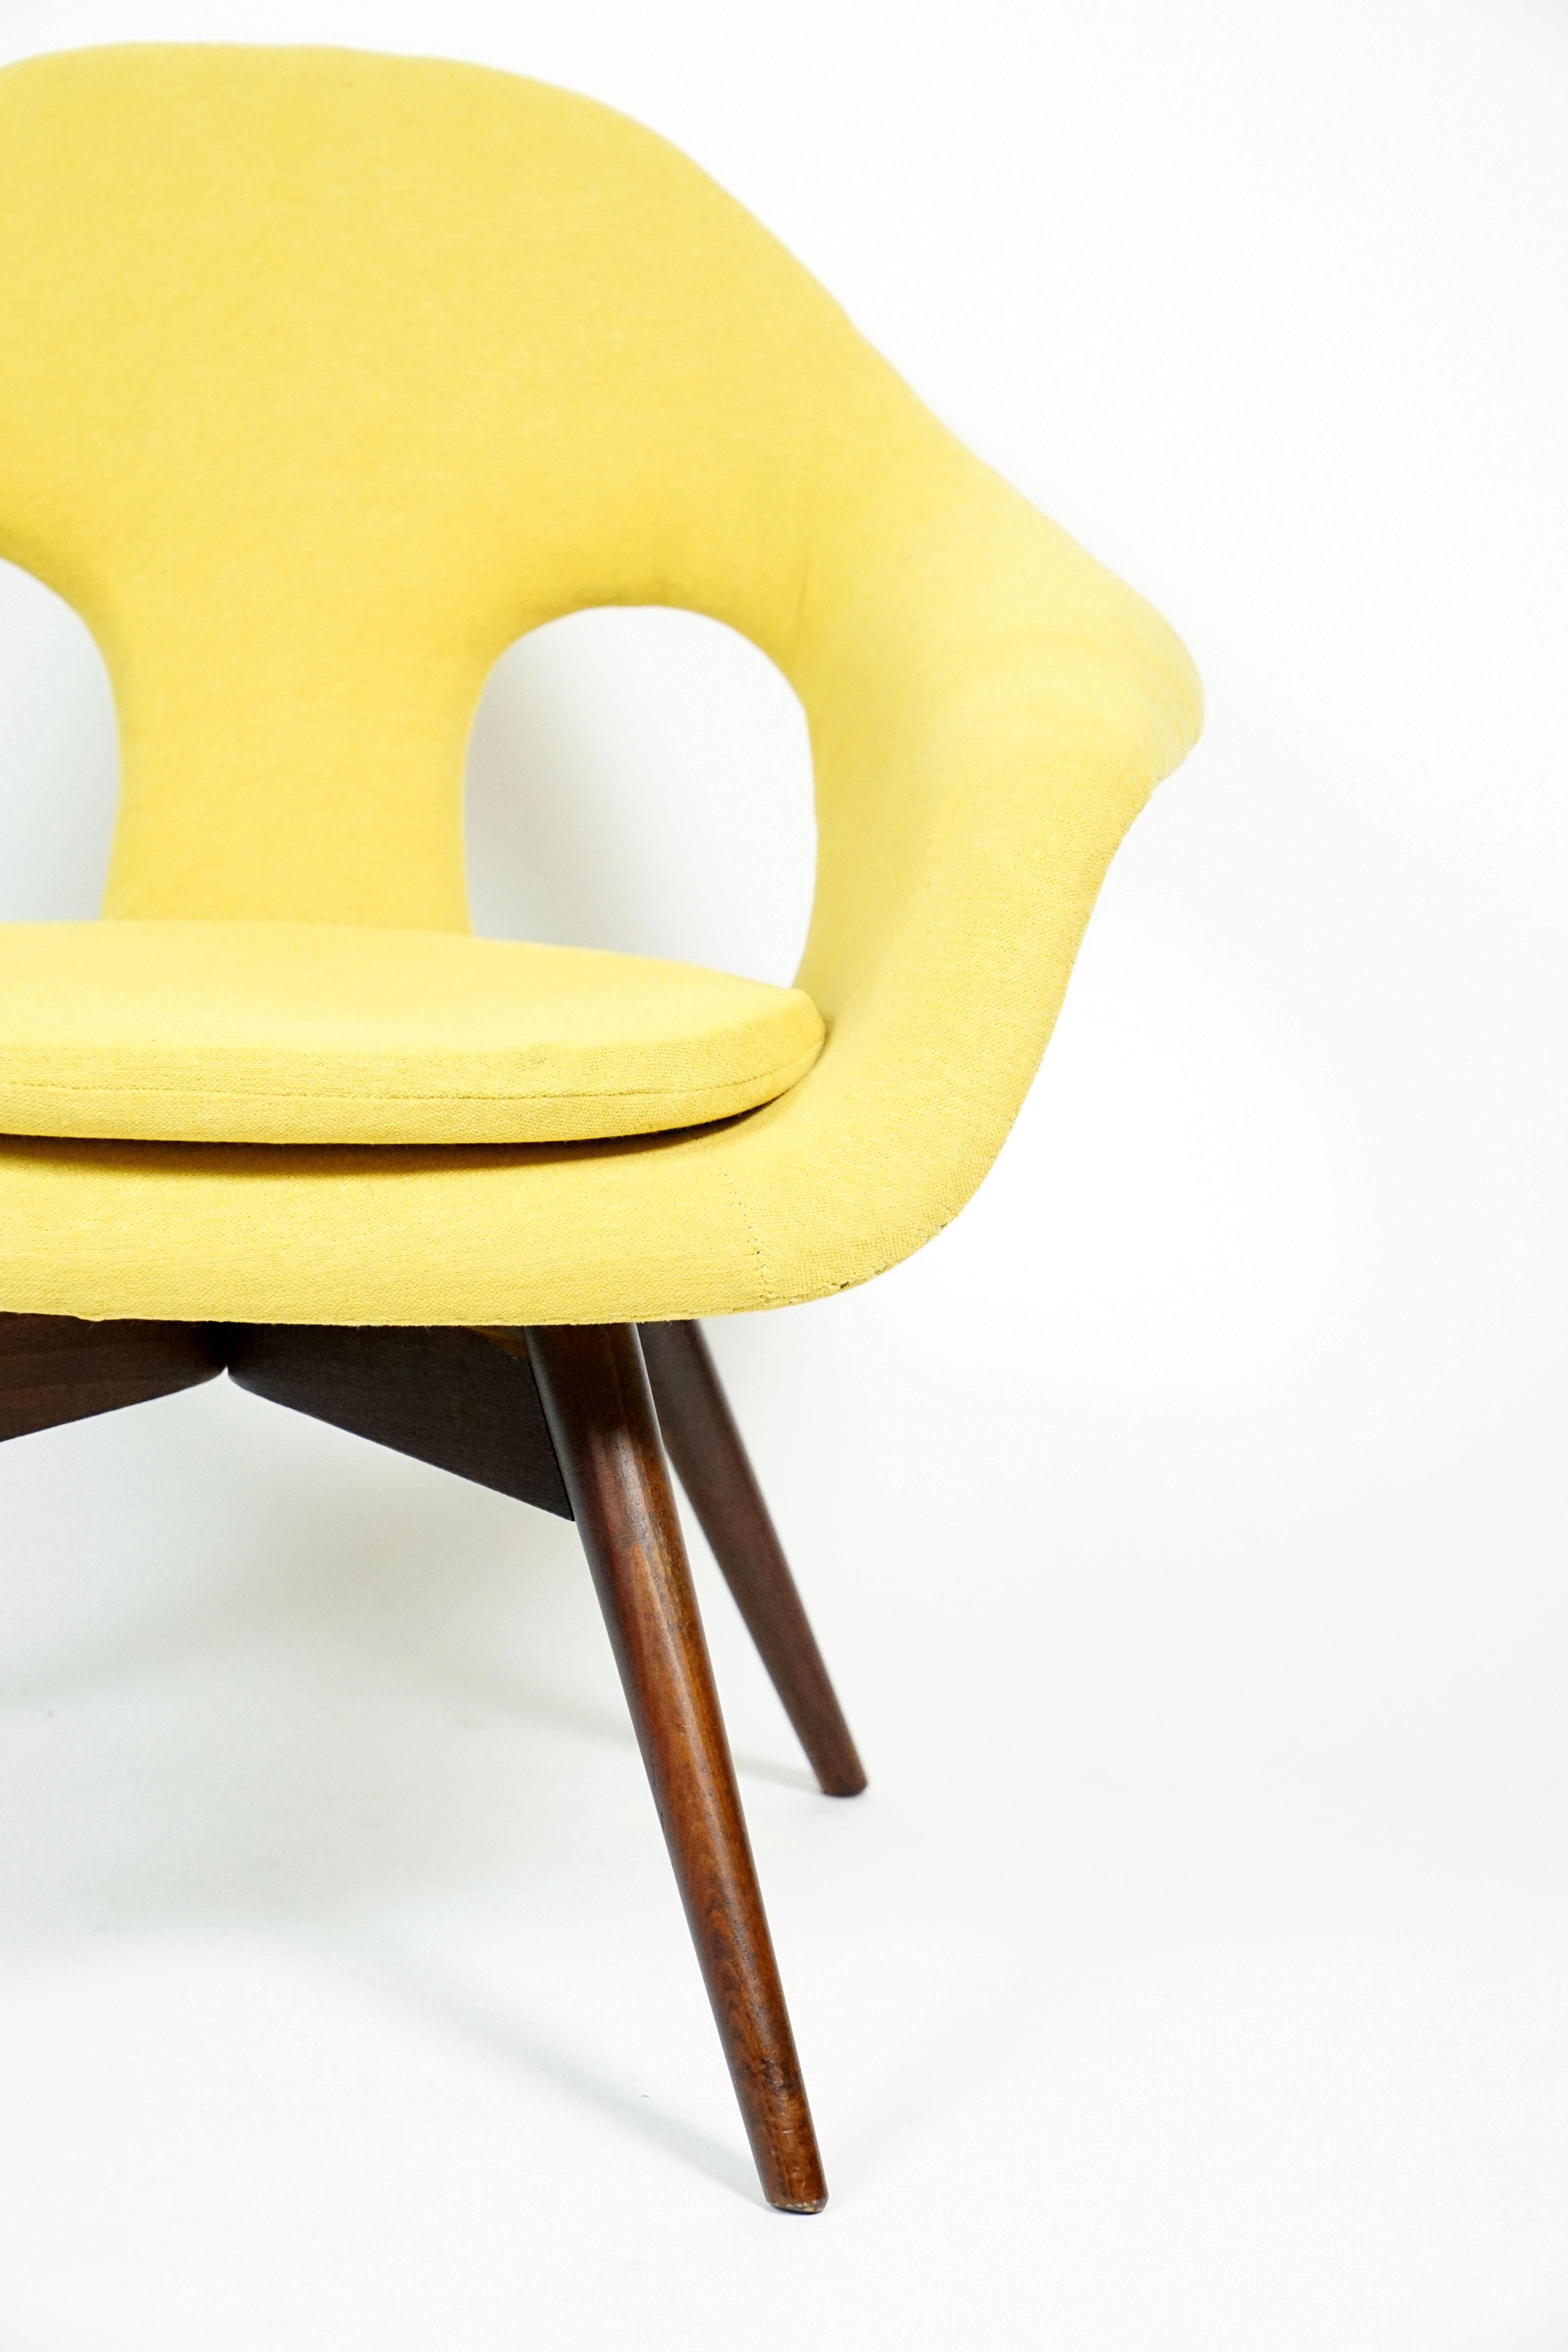 Mid-20th Century Mid-Century Modern Shell Chair František Jirak, 1960s For Sale